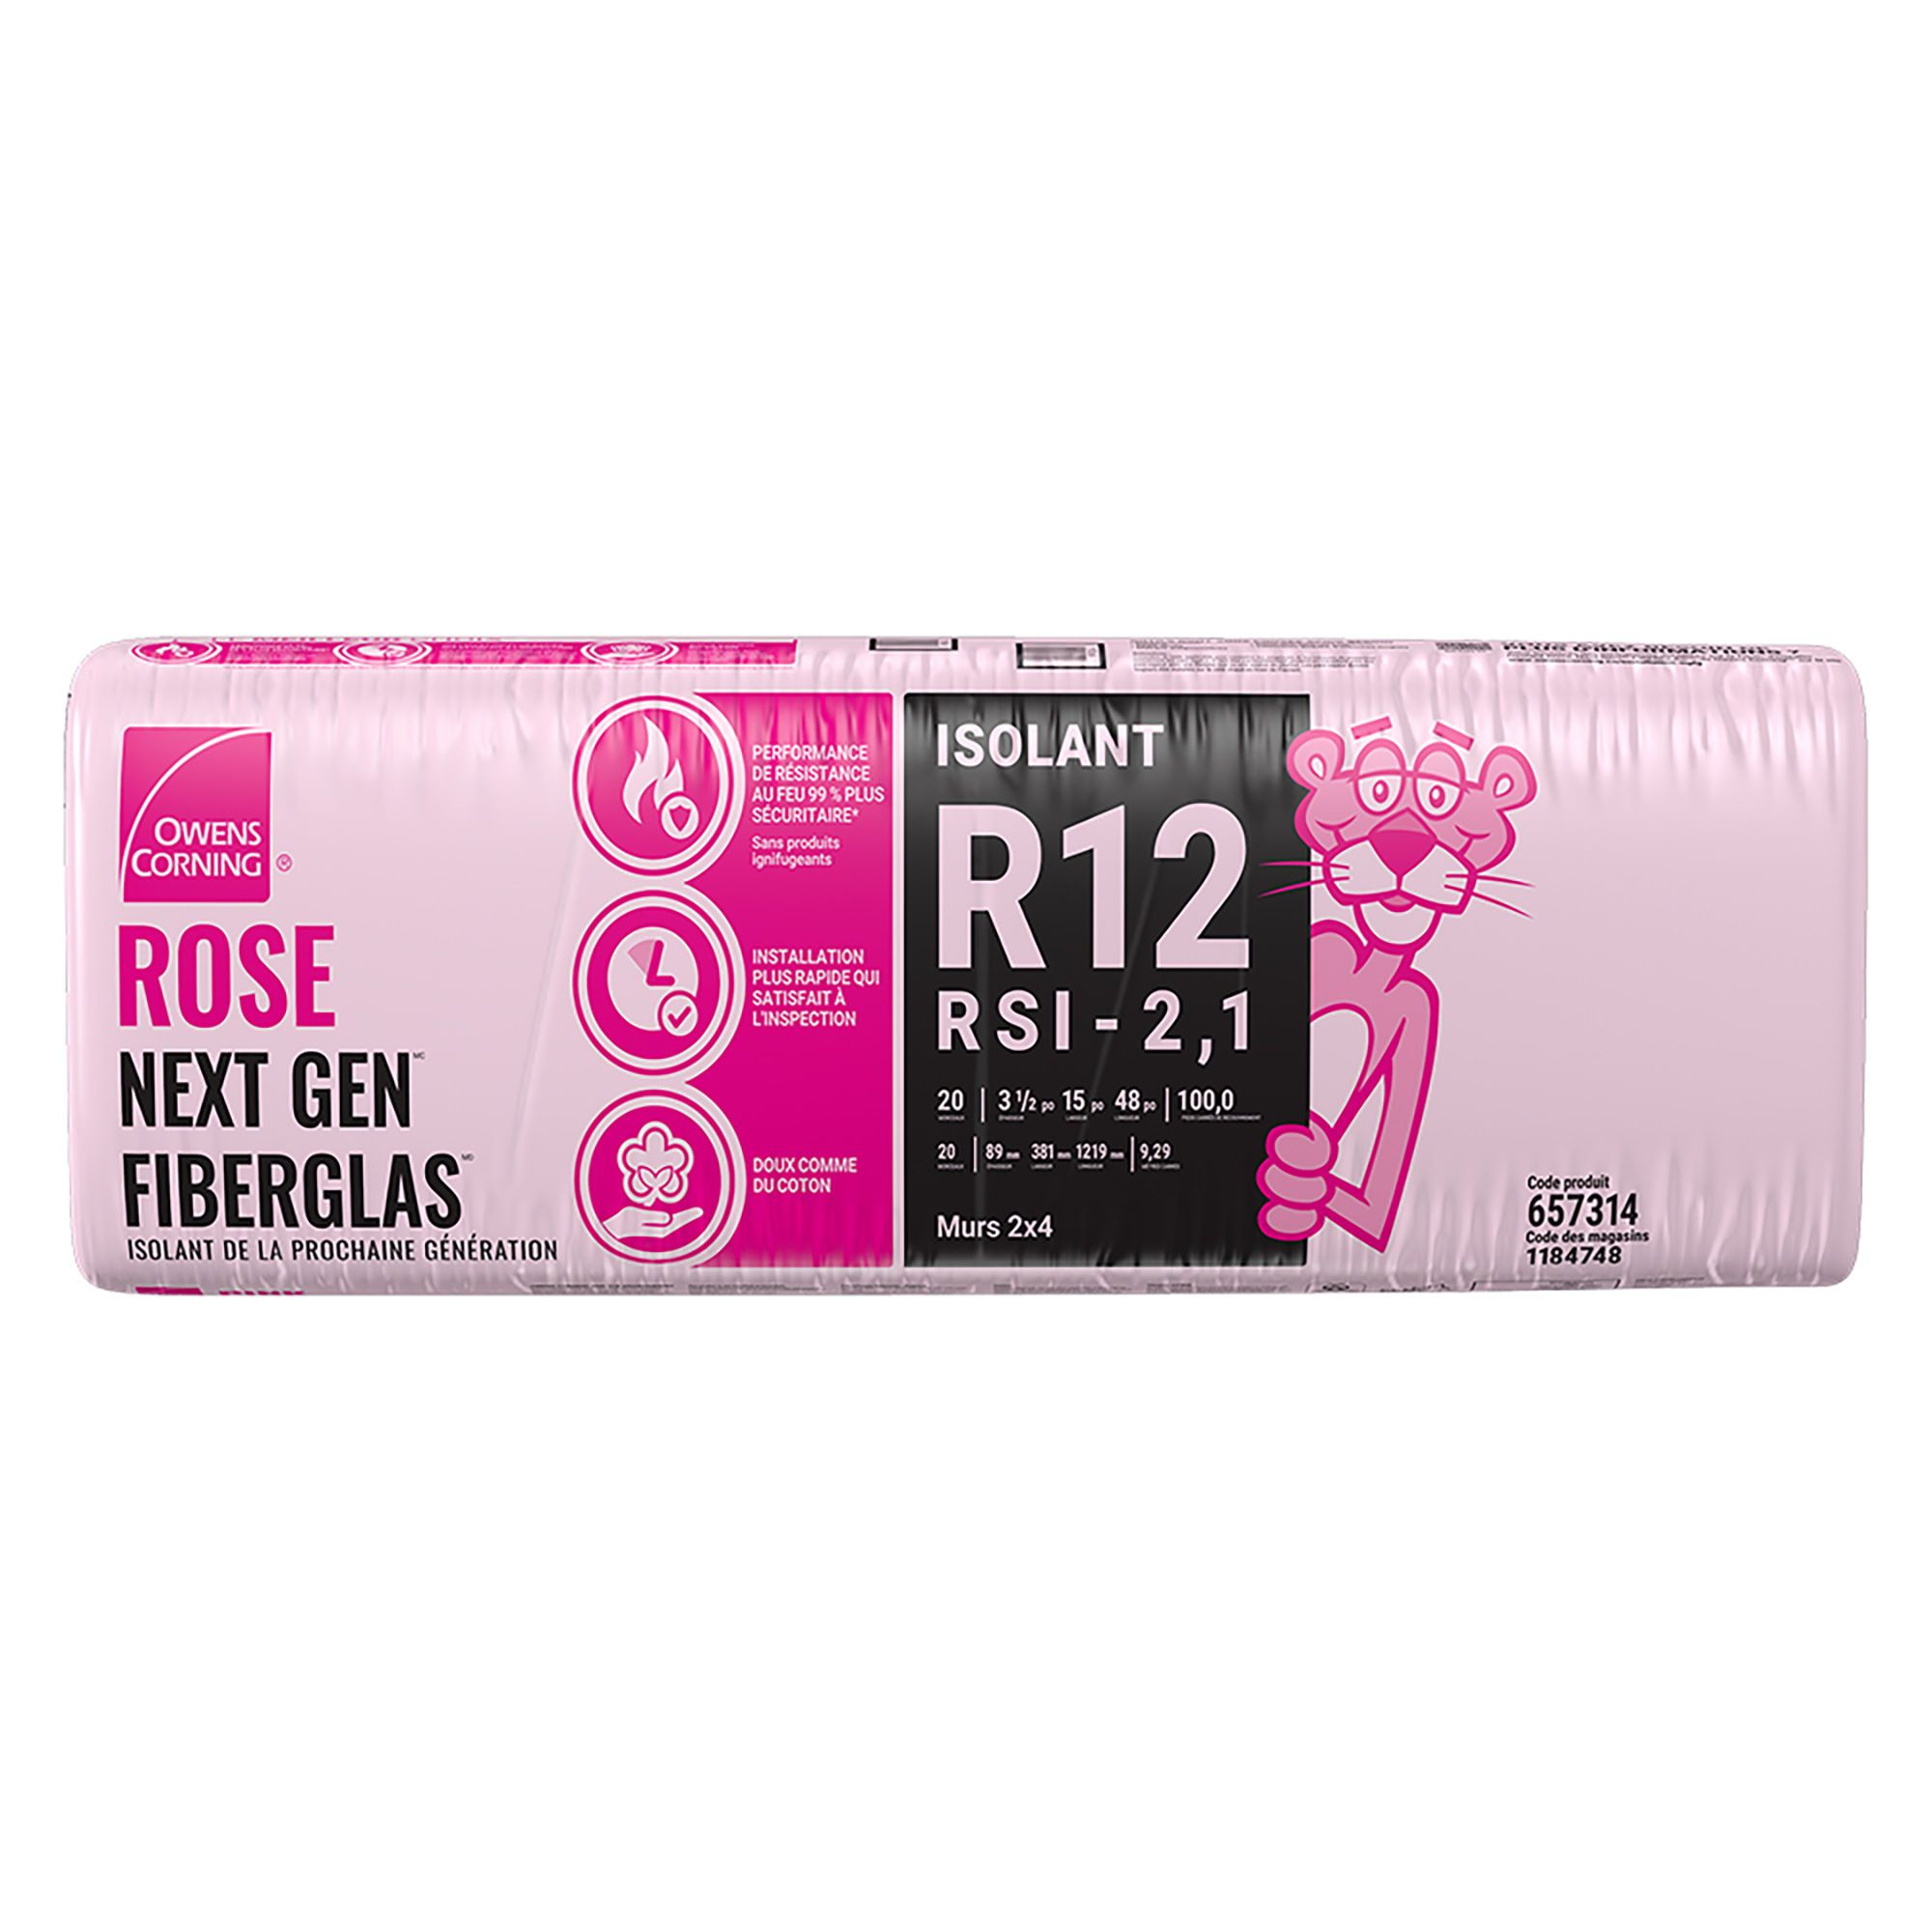 R-12 Pink Next Gen Fiberglas Insulation - 15